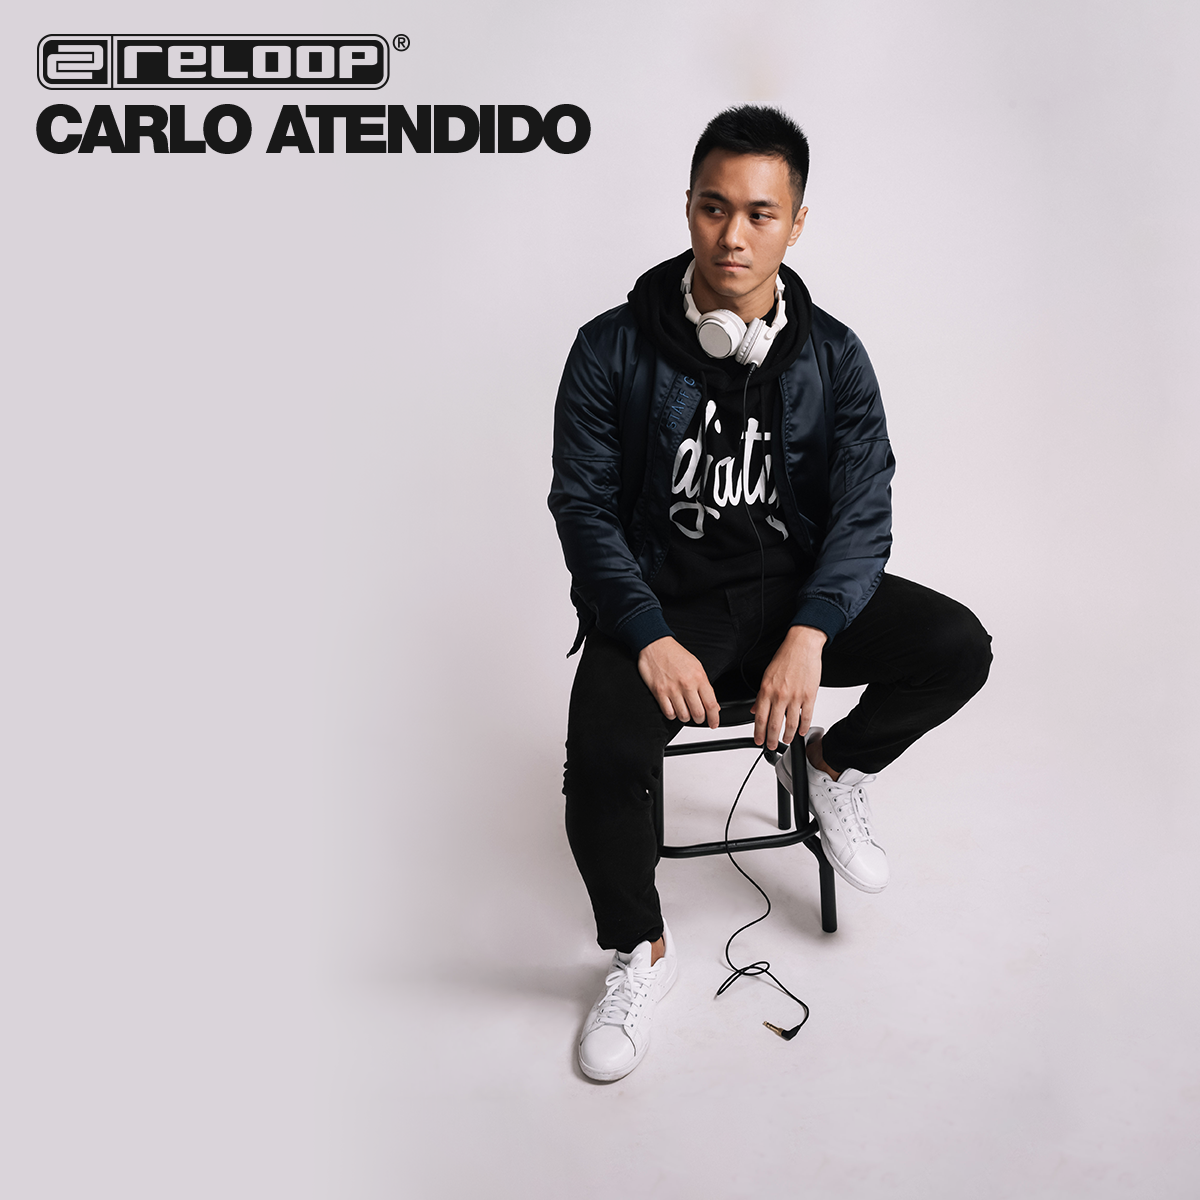 Welcome to the #TeamReloop DJ Carlo Atendido